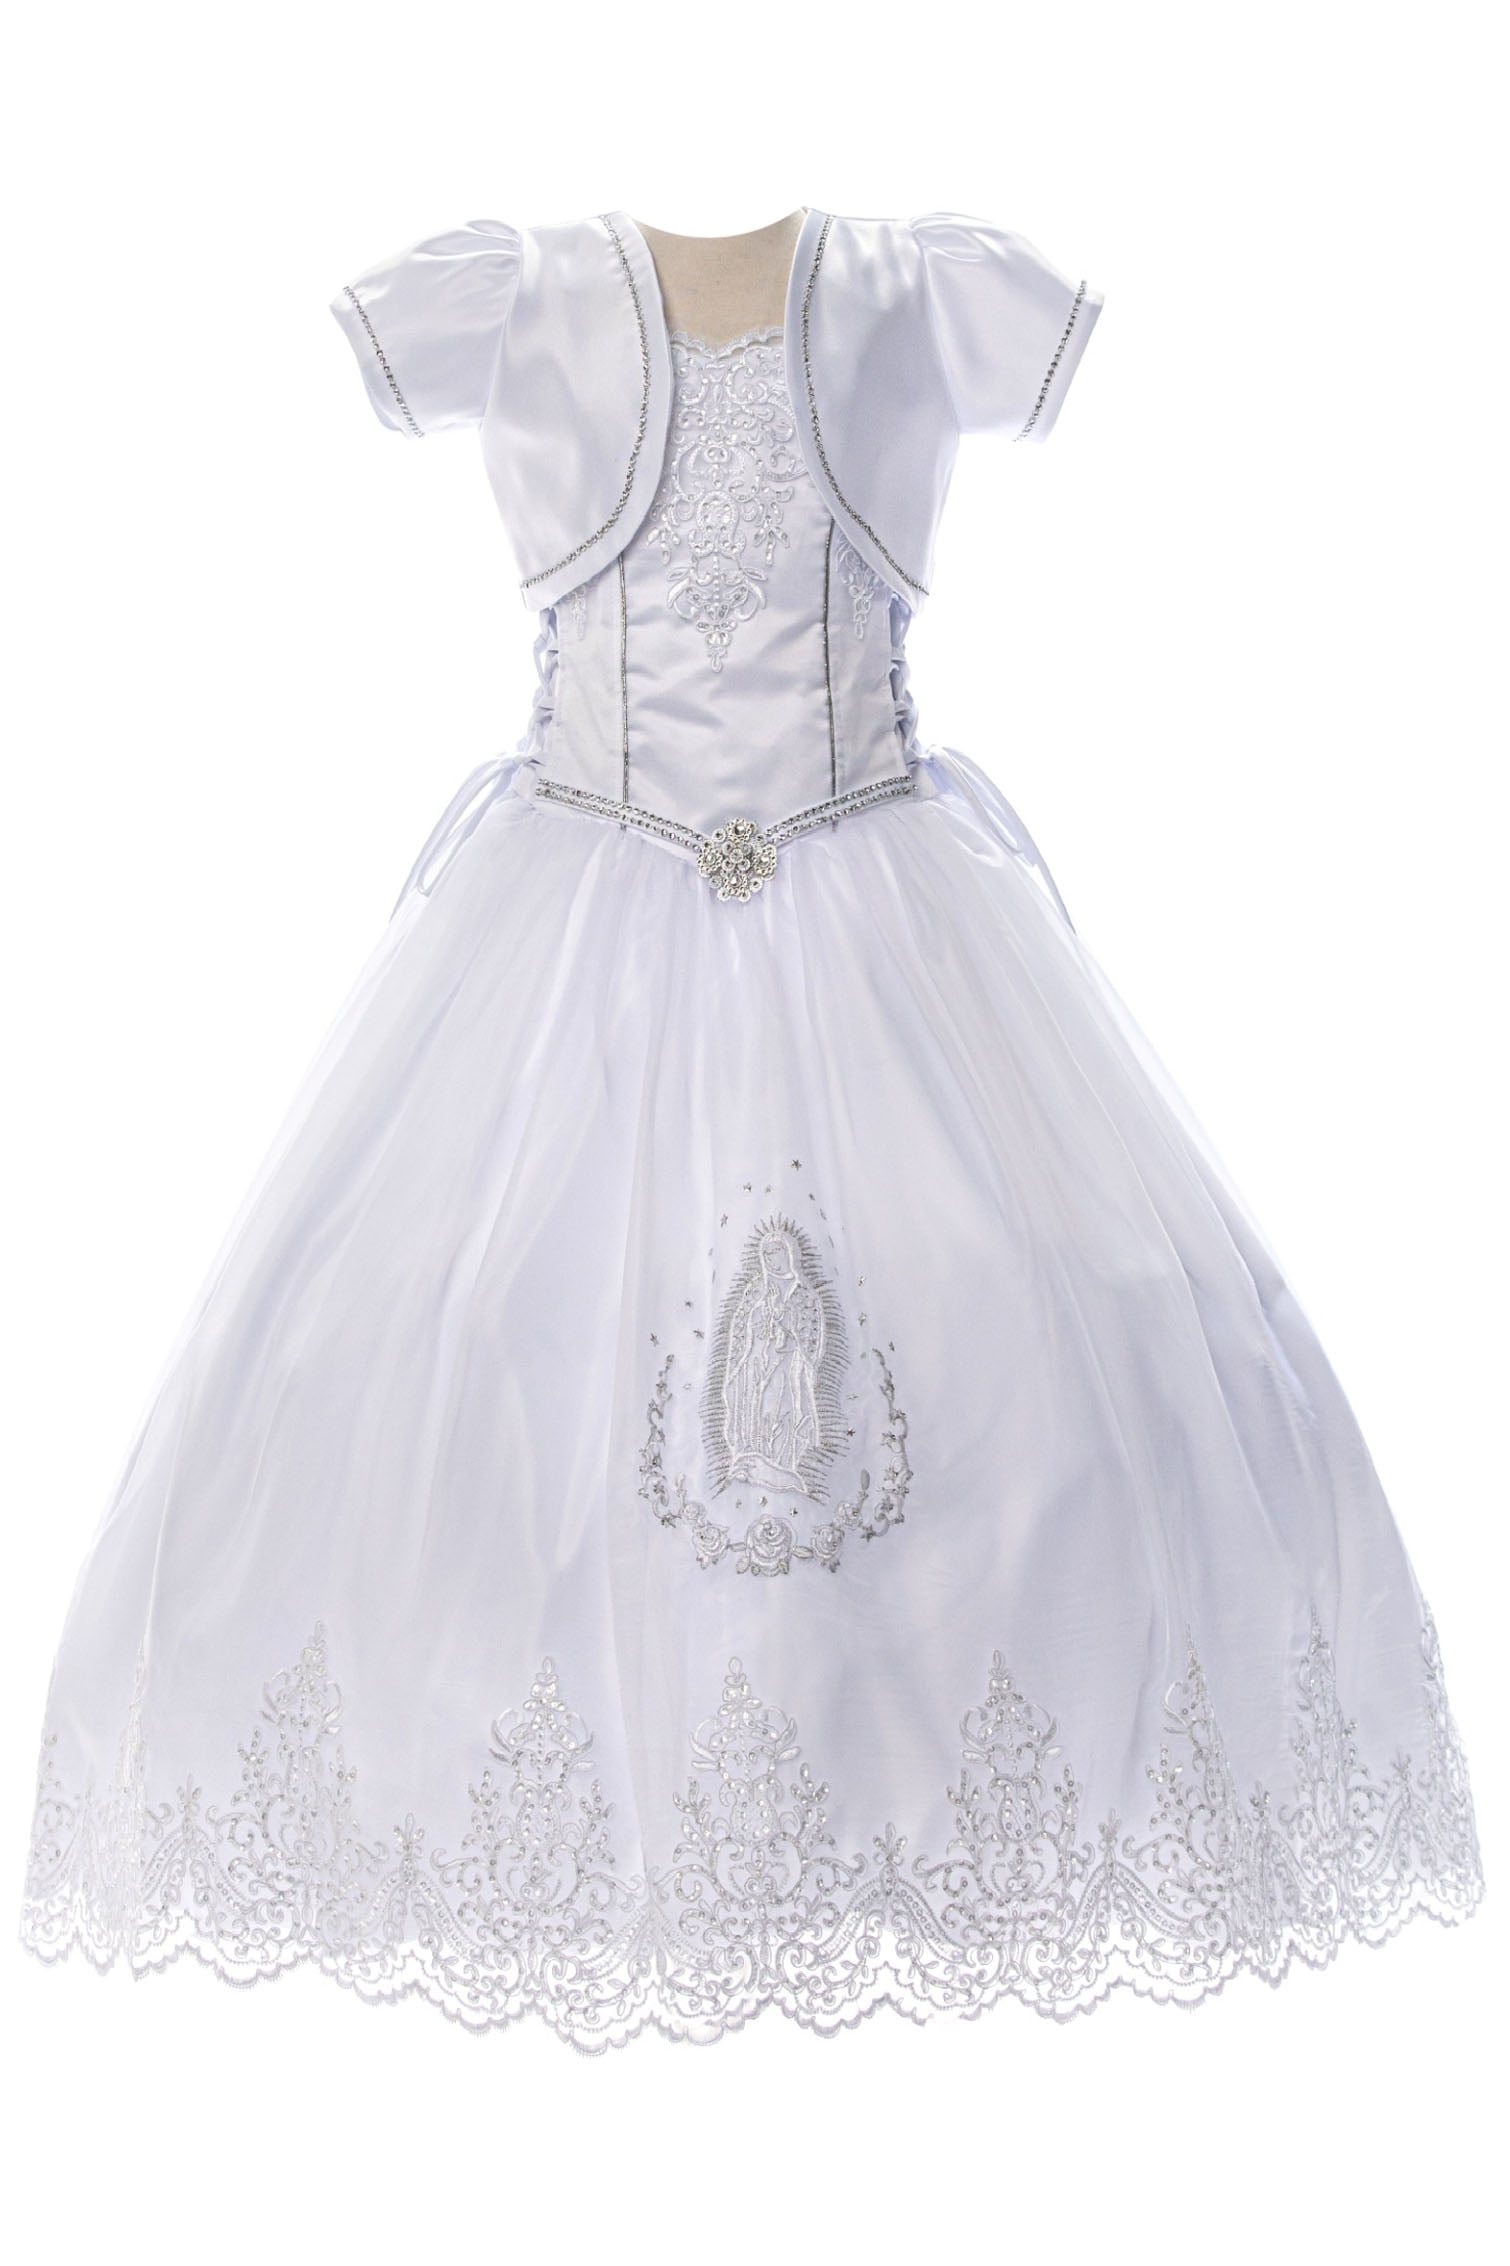 Rainkids Big Girls White Stunning Ruffle Detachable First Communion Dress 7-20 